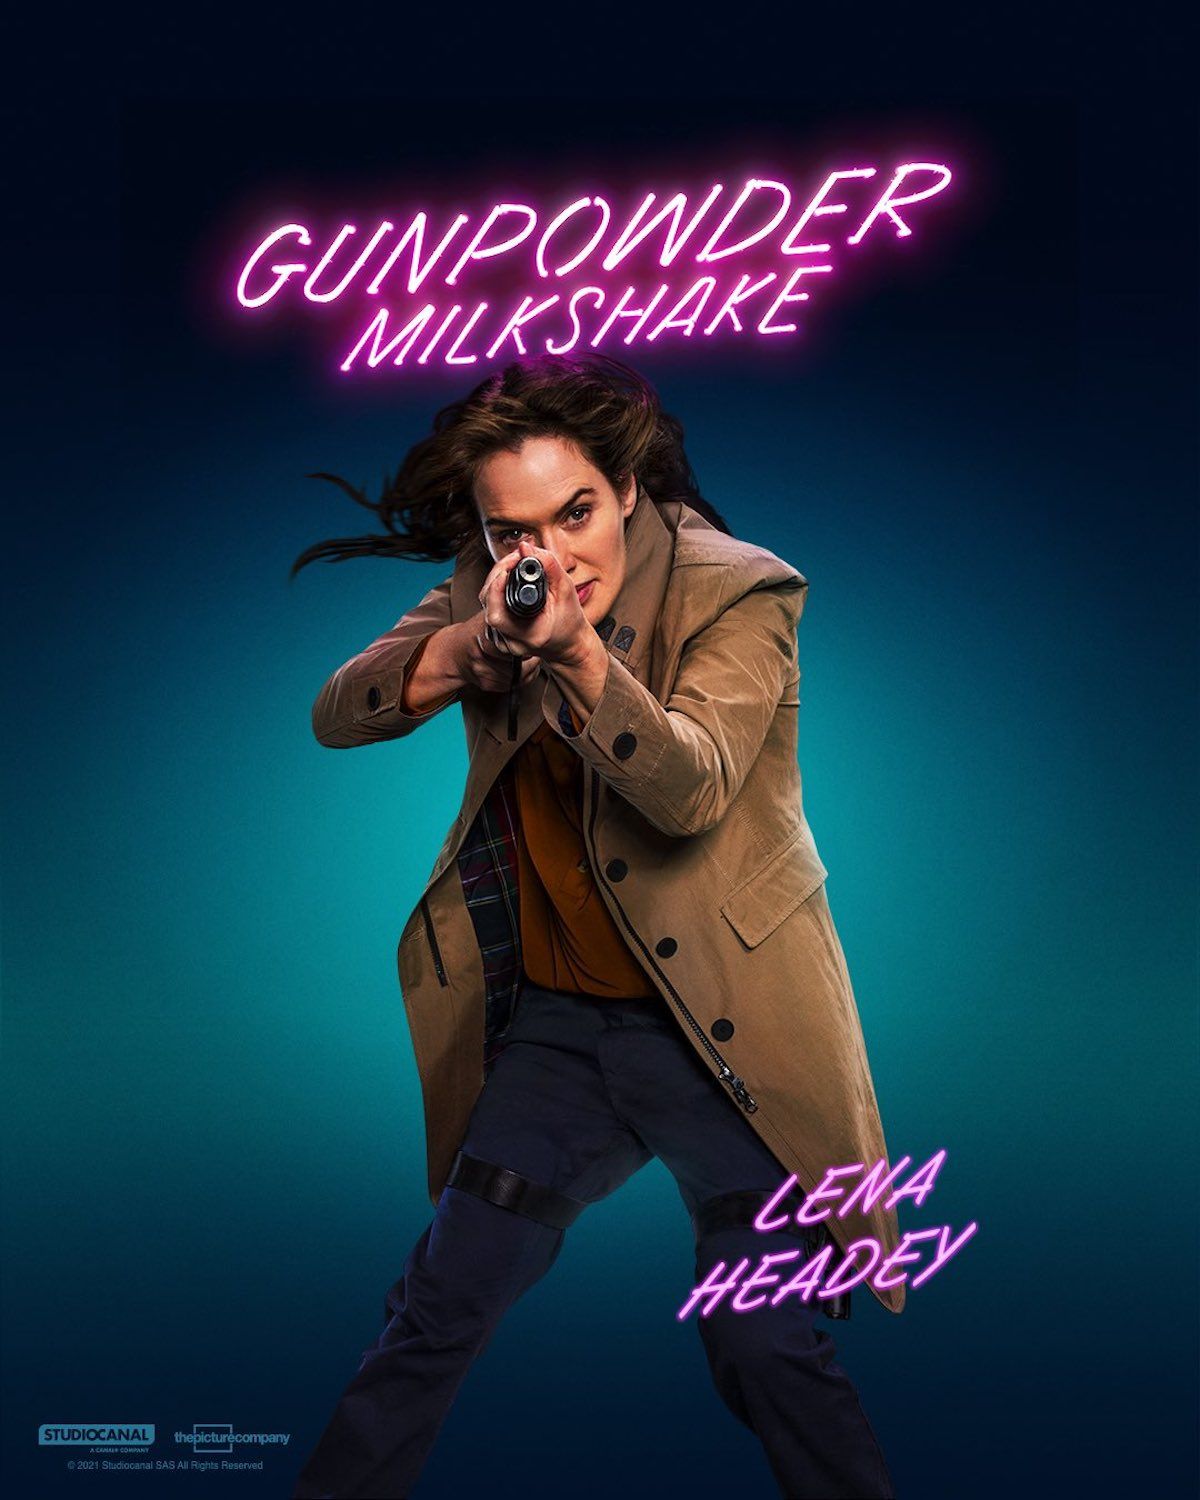 gunpowder-milkshake-poster-lena-headey-1